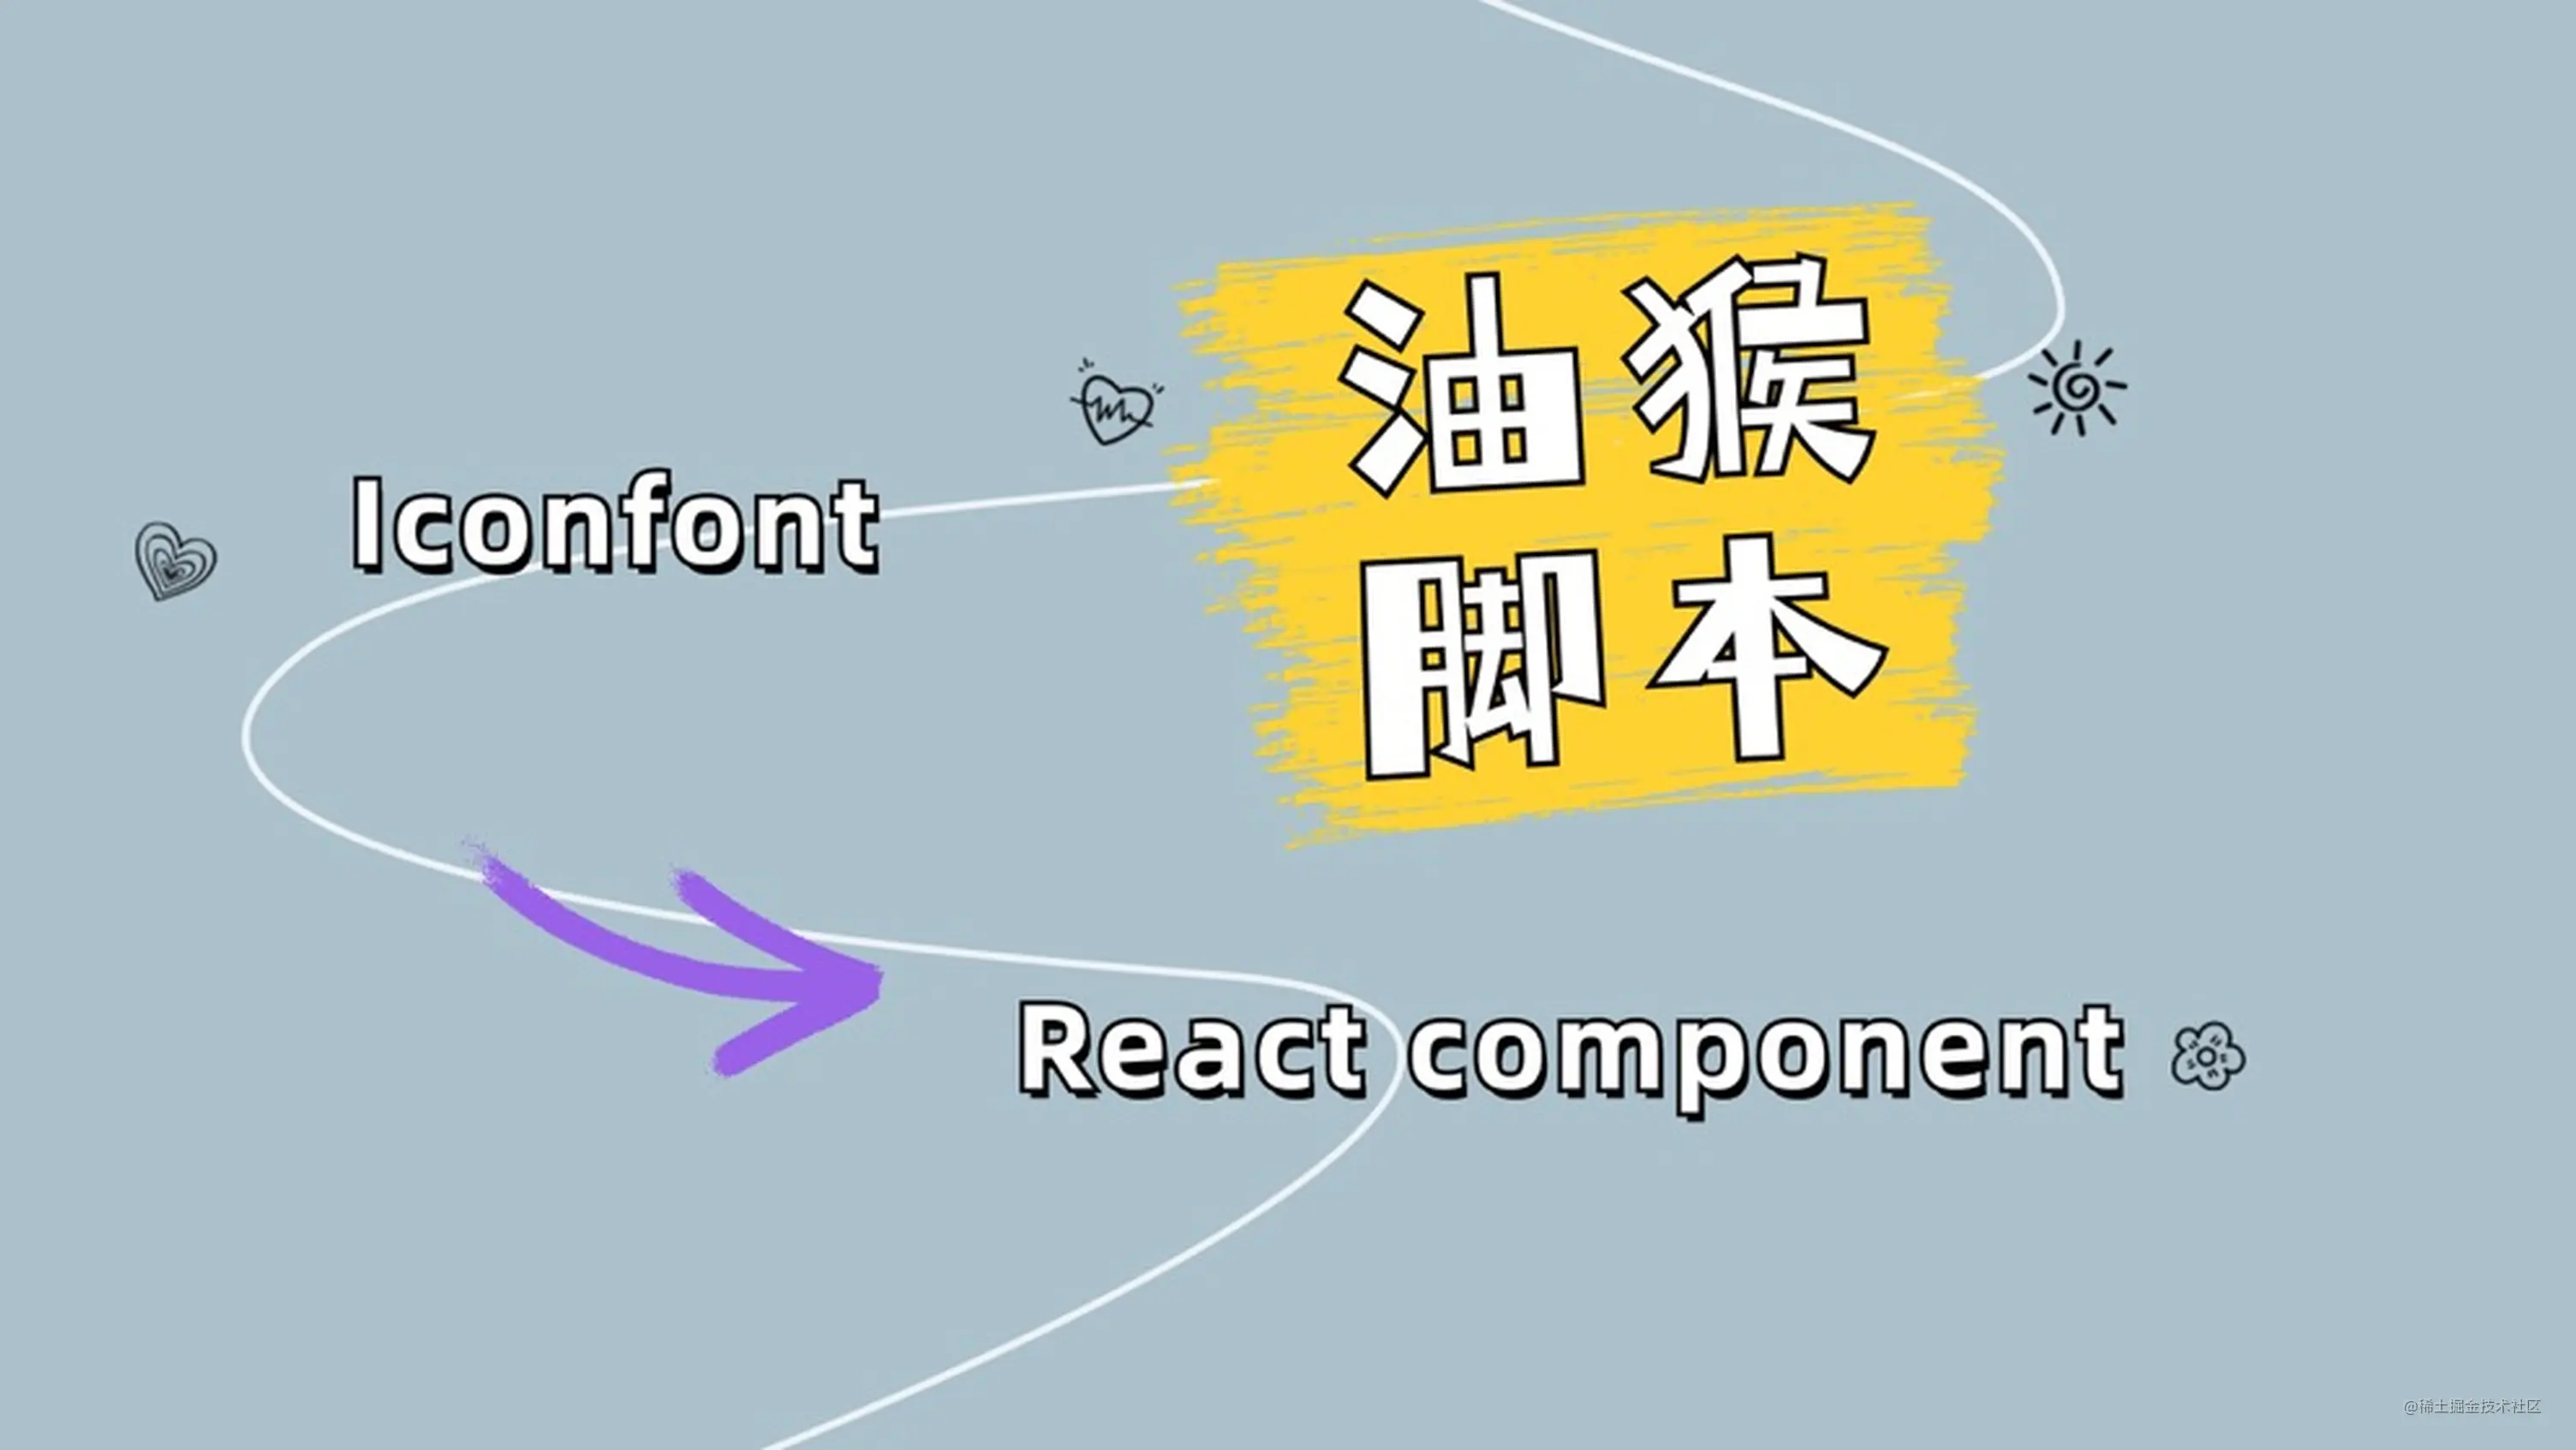 【油猴脚本】在 Iconfont 上直接复制 React component 代码